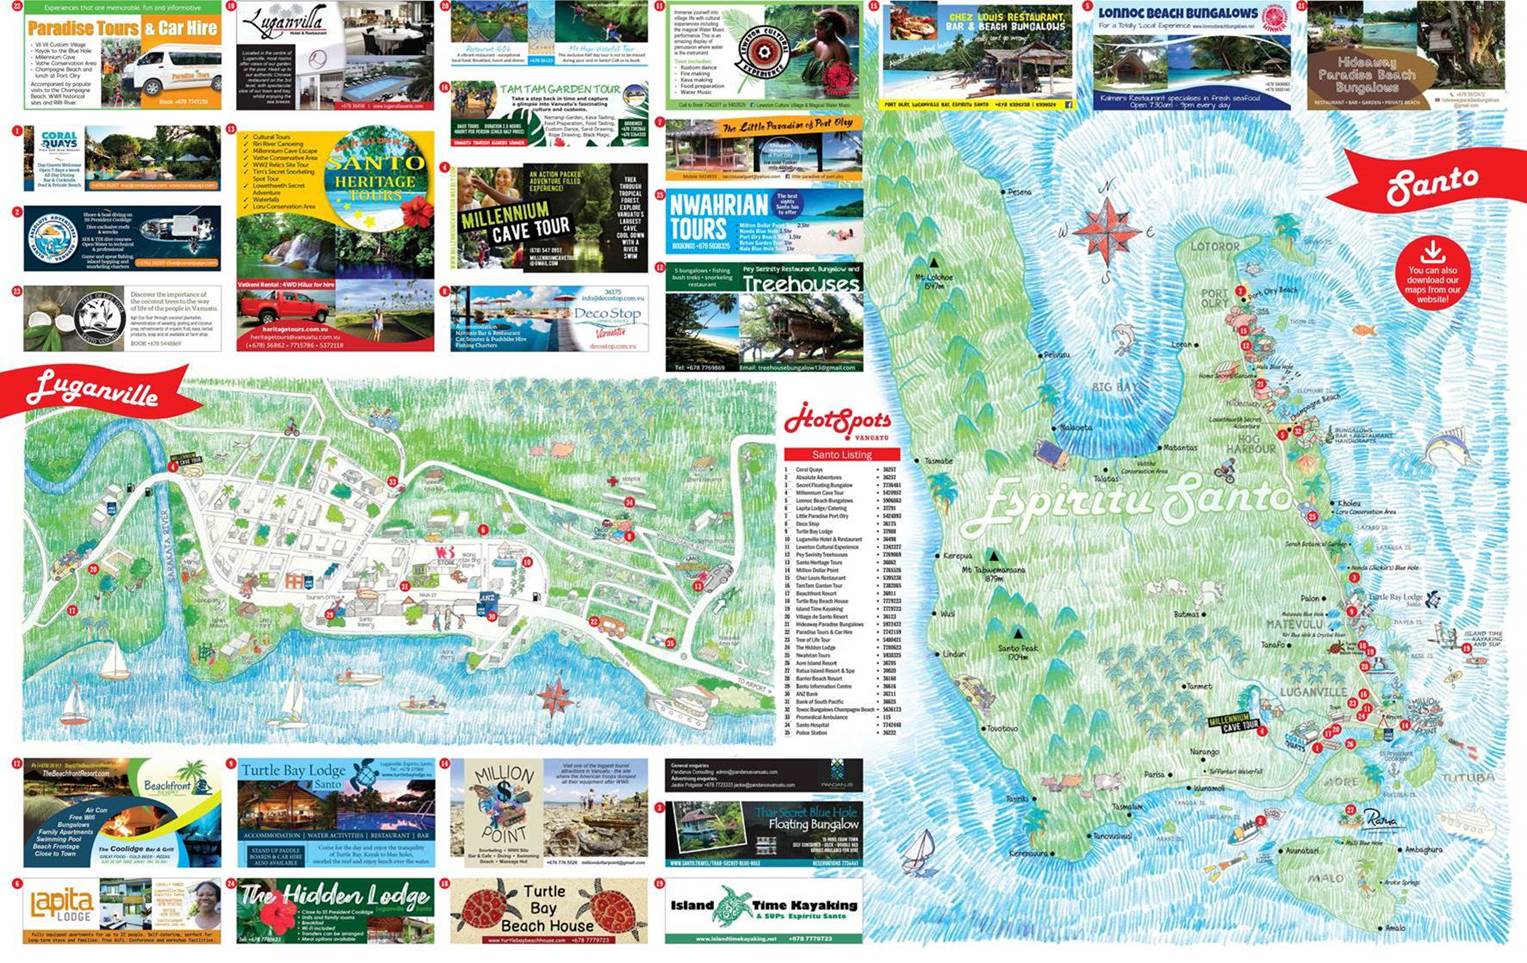 Hotspots Tourist information brochure of the Espiritu Santo